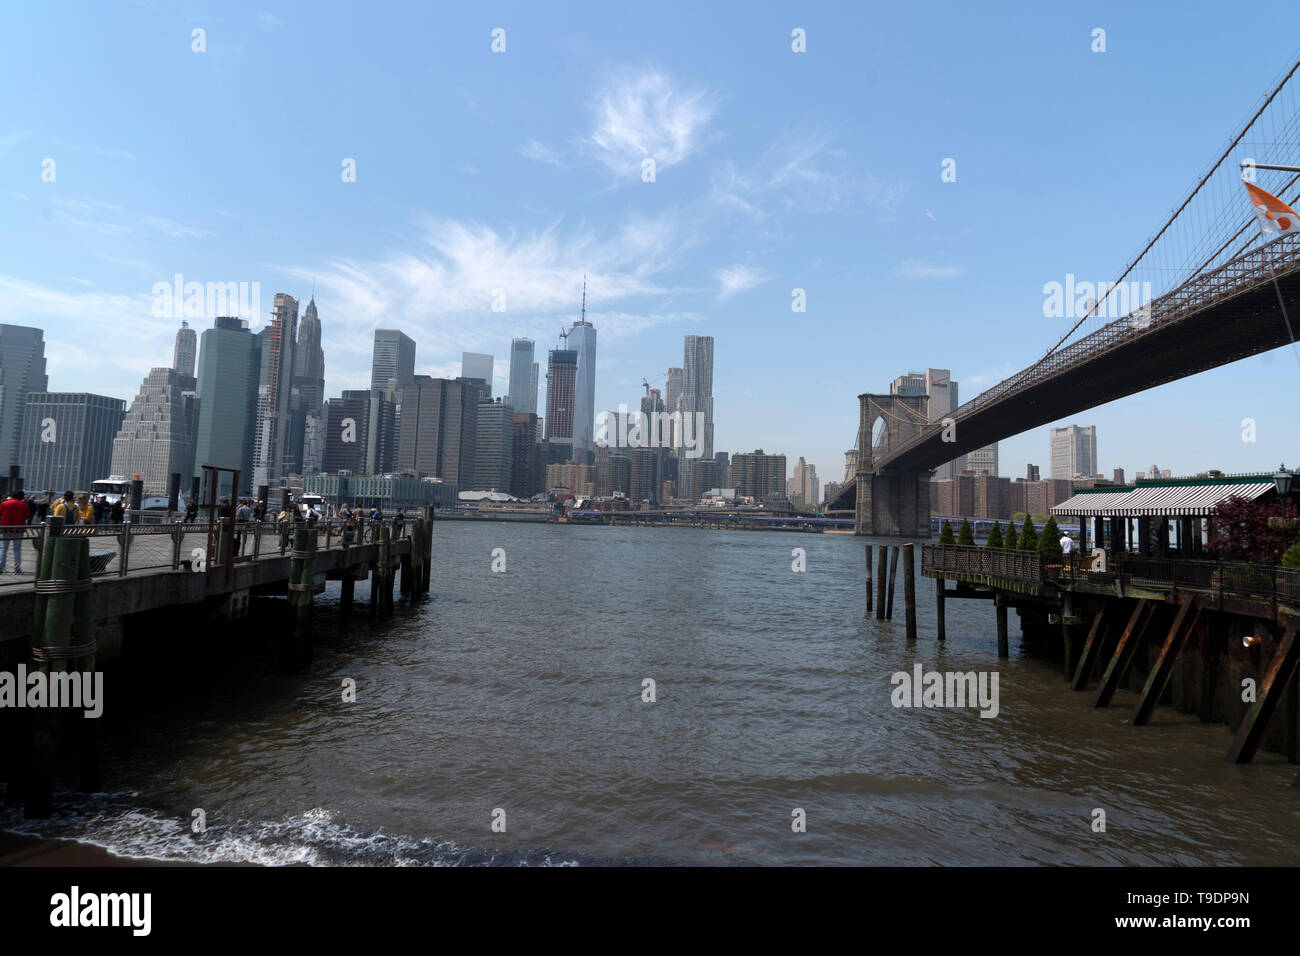 NEW YORK, USA, MAY 2 2019 - Dumbo view of Brooklyn bridge full of ...